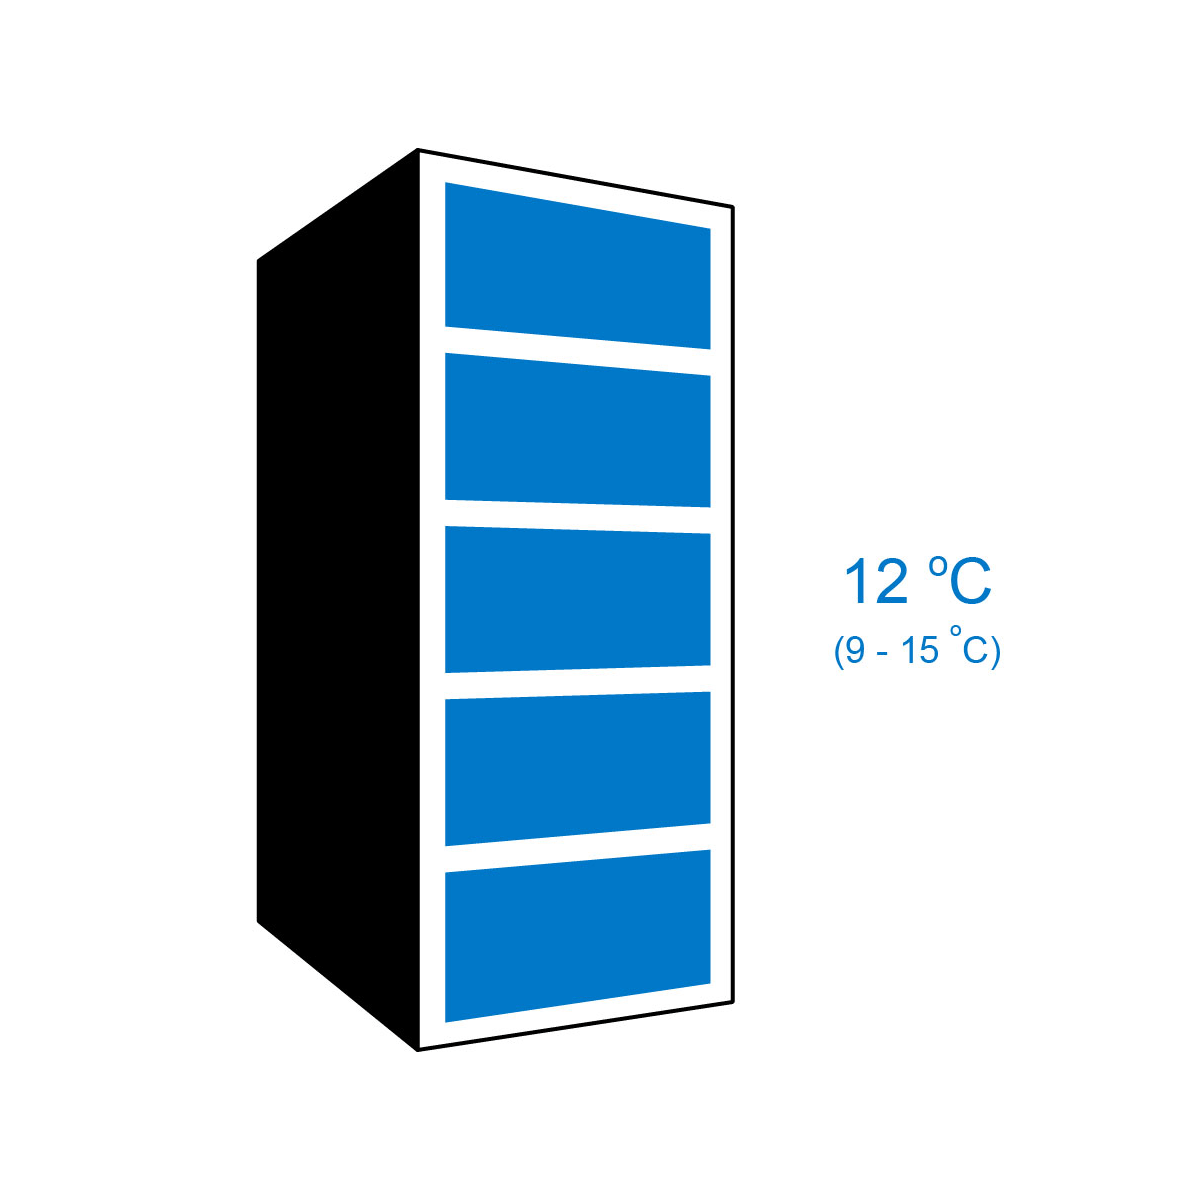 【Eurocave】V-259V3 Maturing 1 temperature wine cabinet Compact, Large model